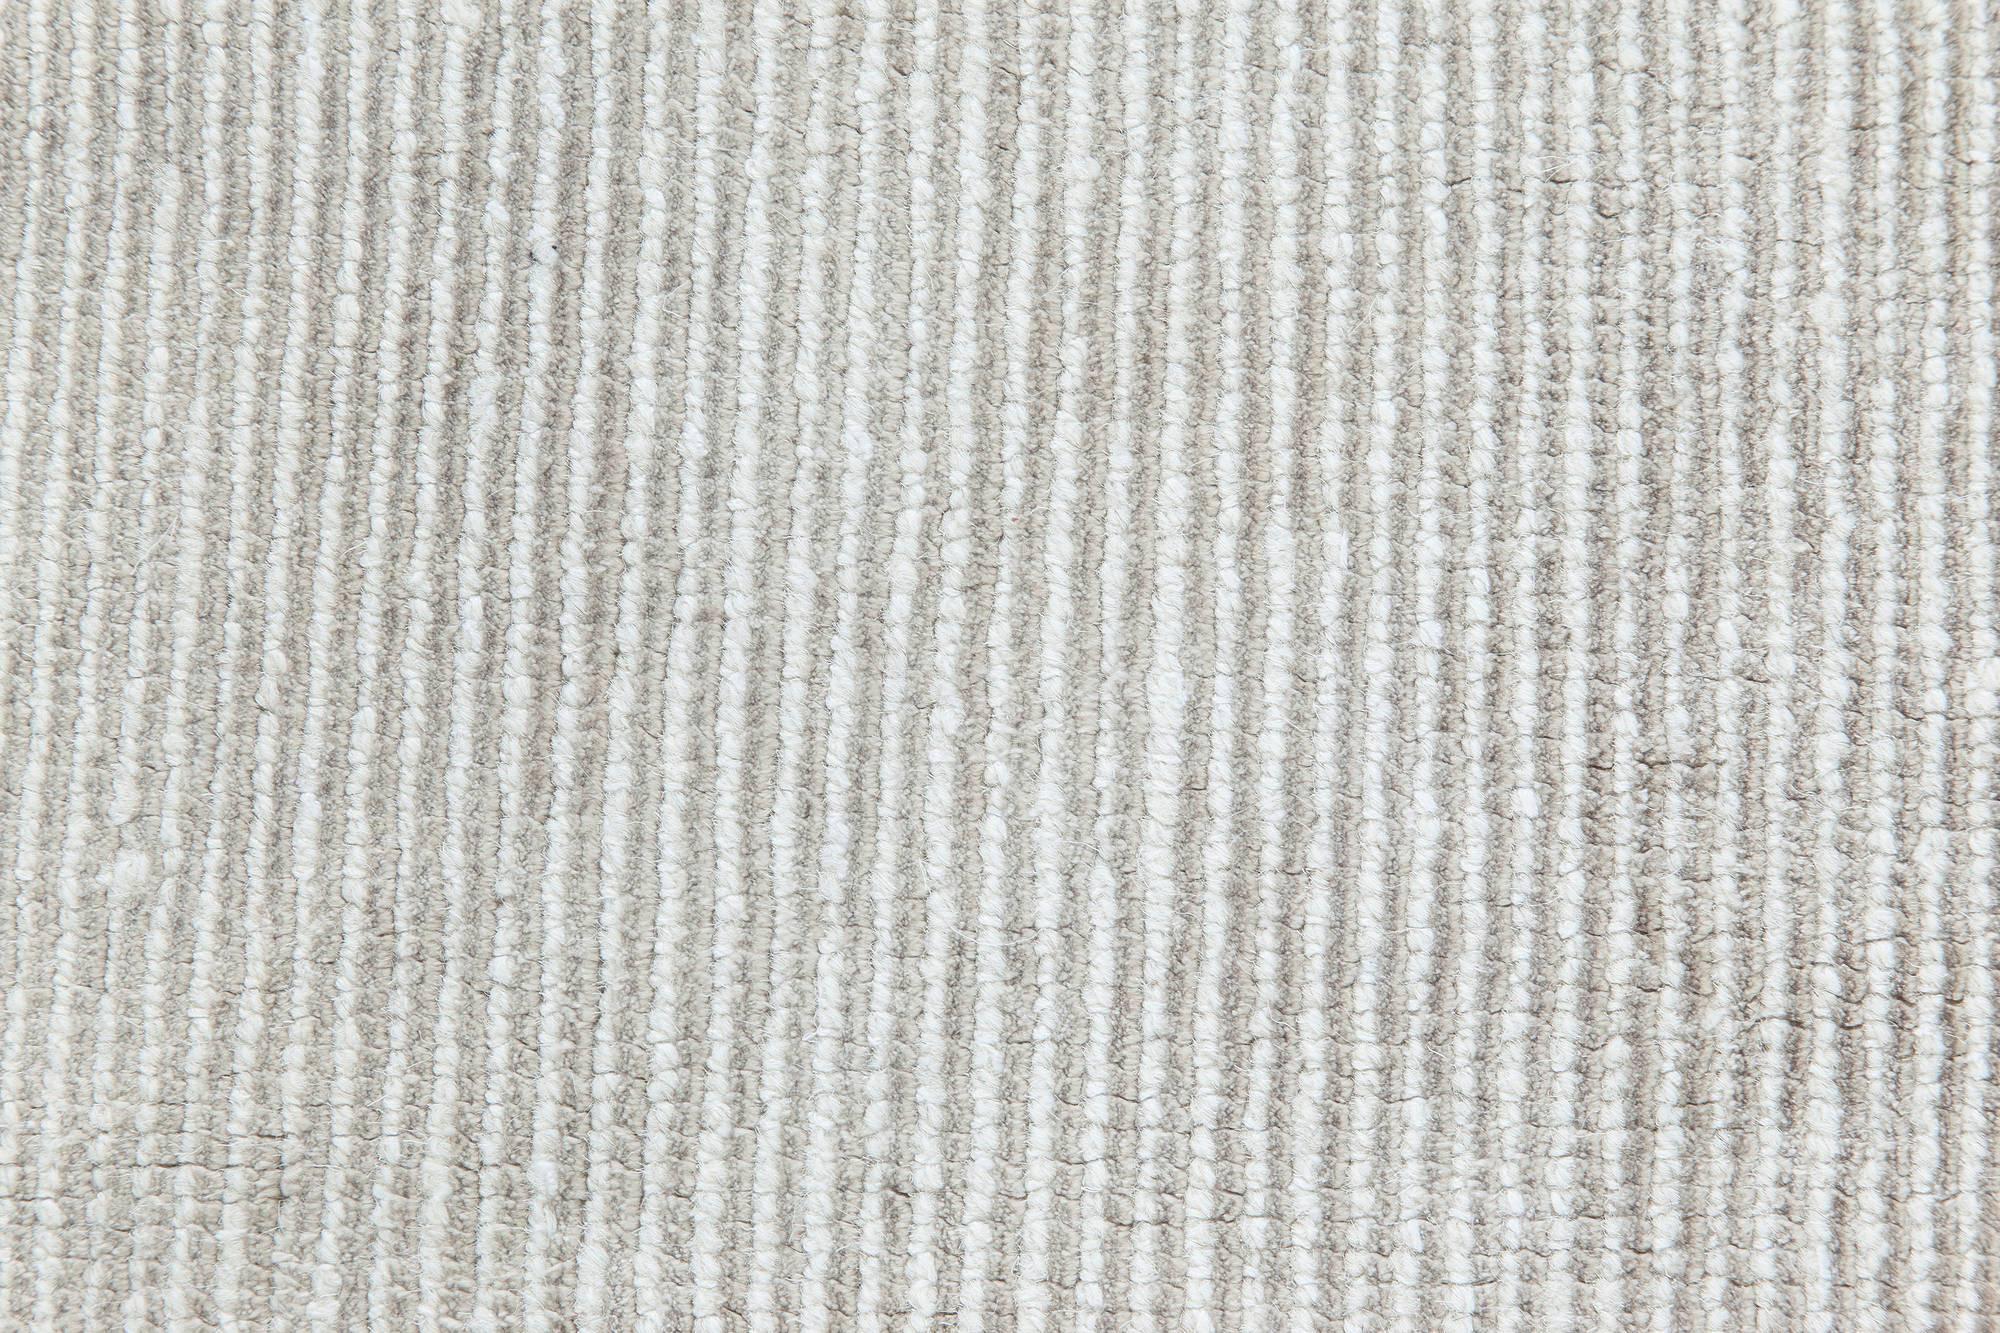 Contemporary striped handmade wool rug by Doris Leslie Blau.
Size: 3'5